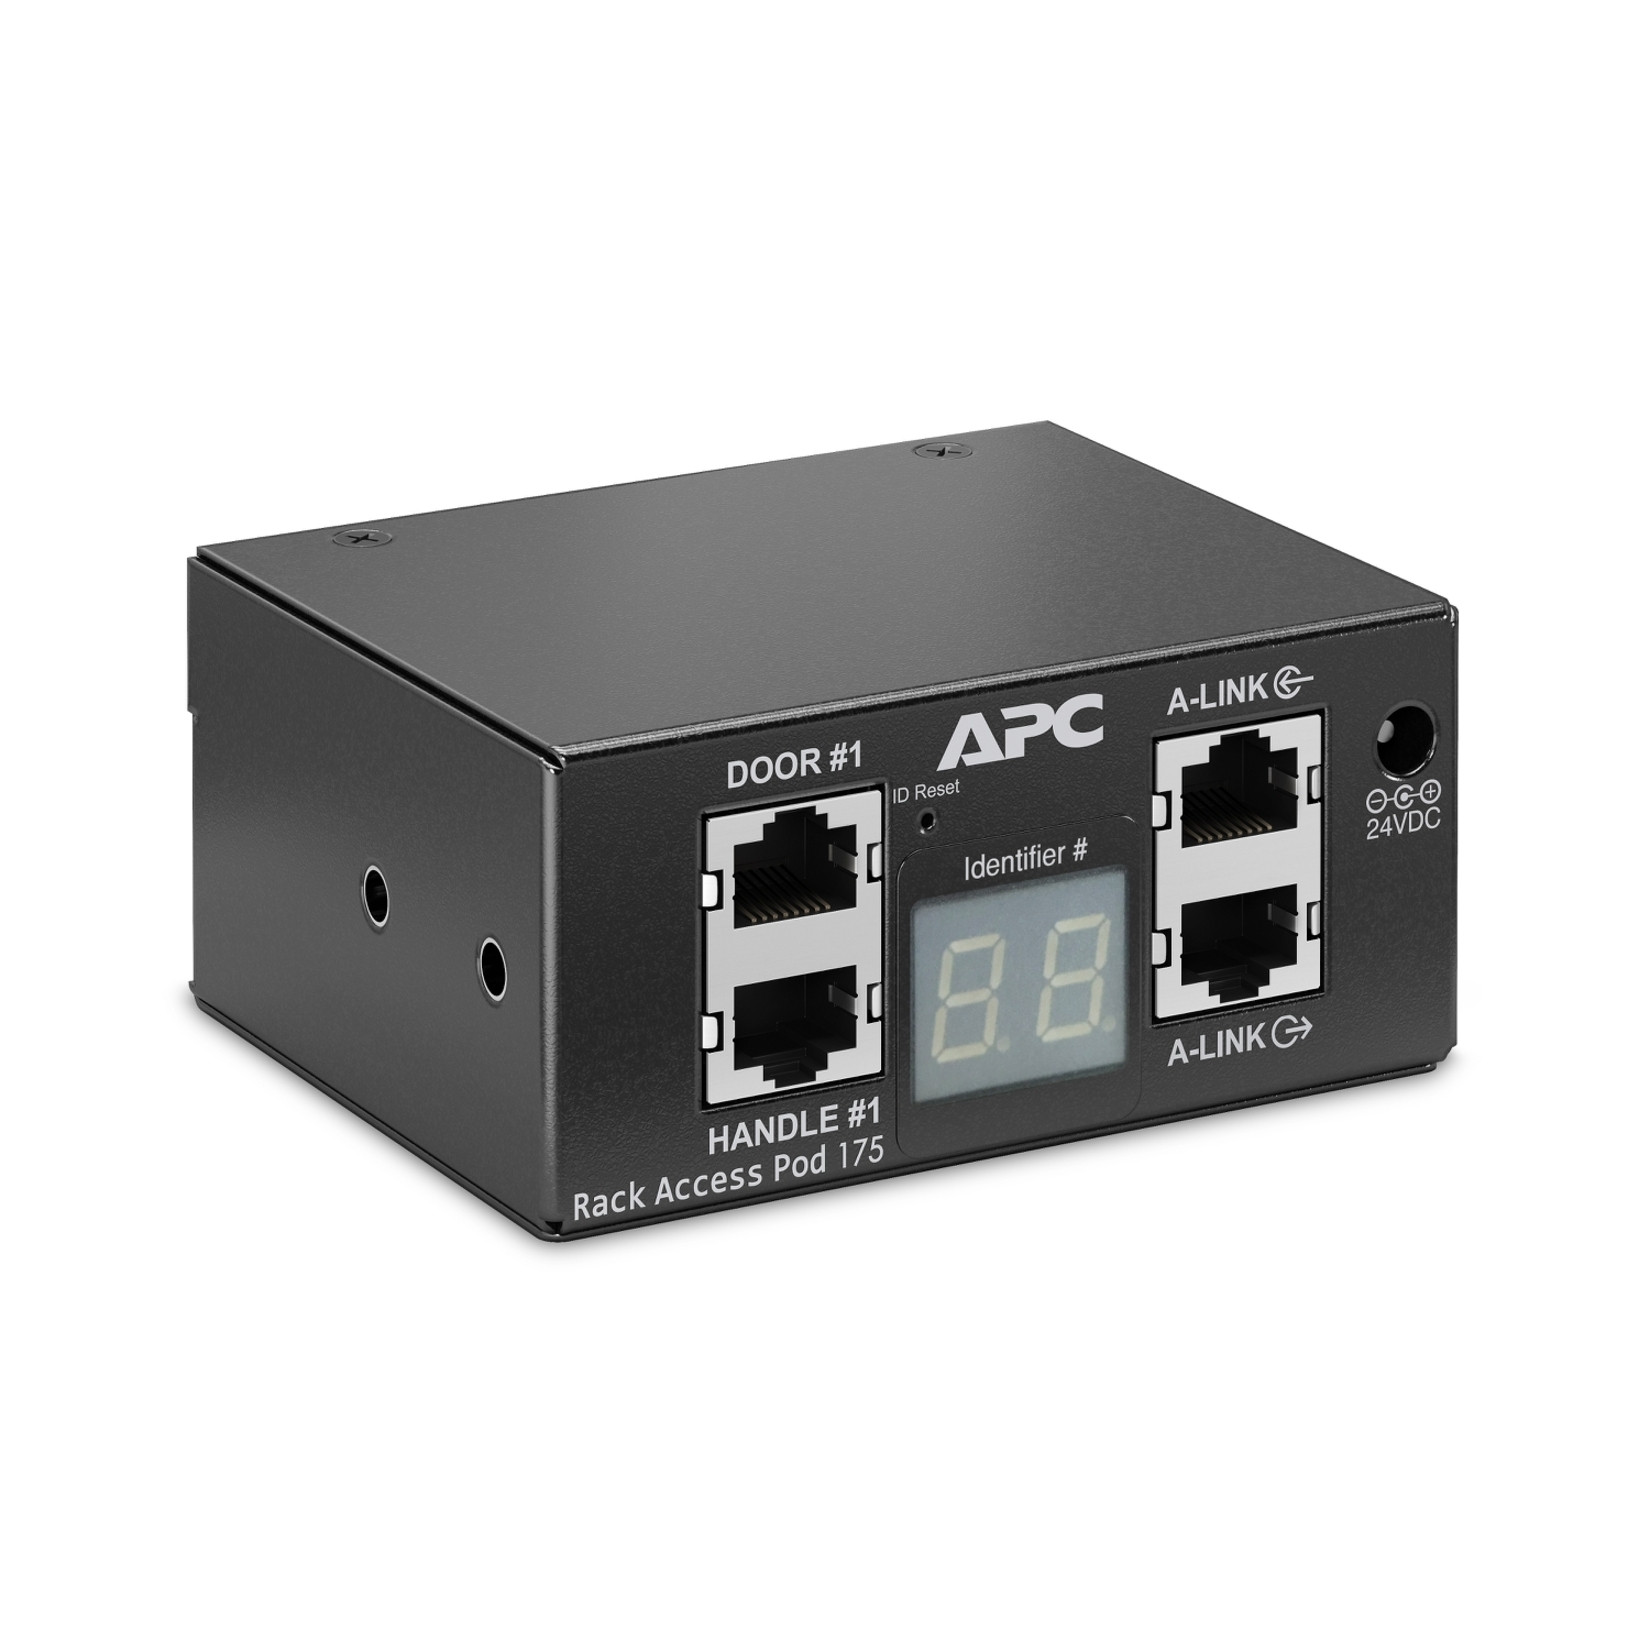 APC by Schneider Electric NetBotz Rack Access Pod 175Black NBPD0175